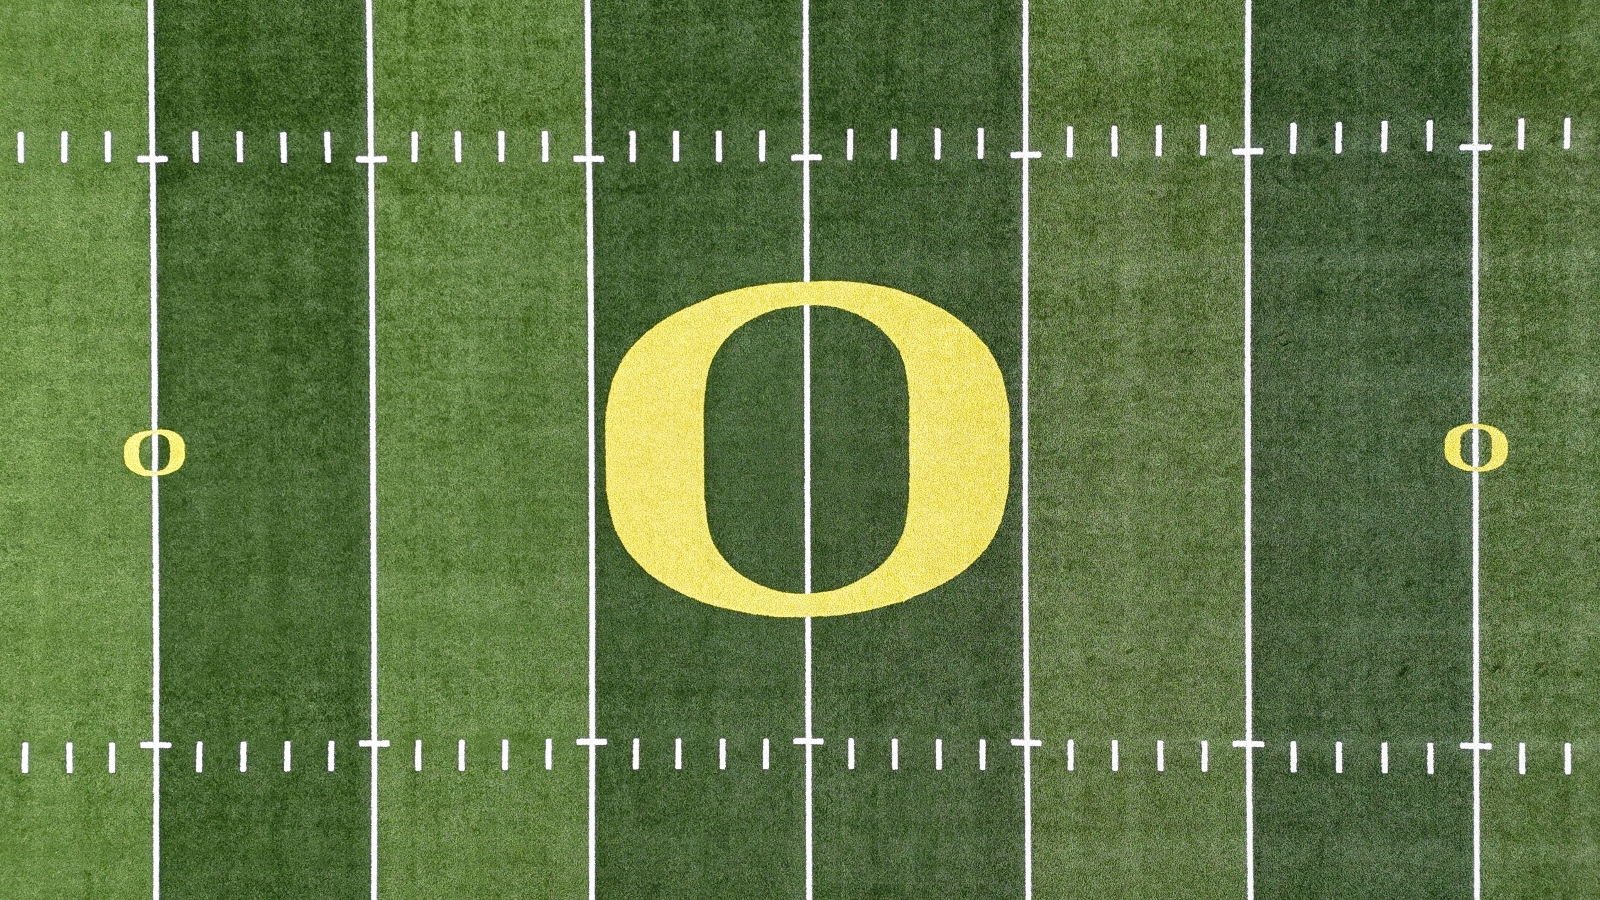 Overhead view of Oregon Ducks football field